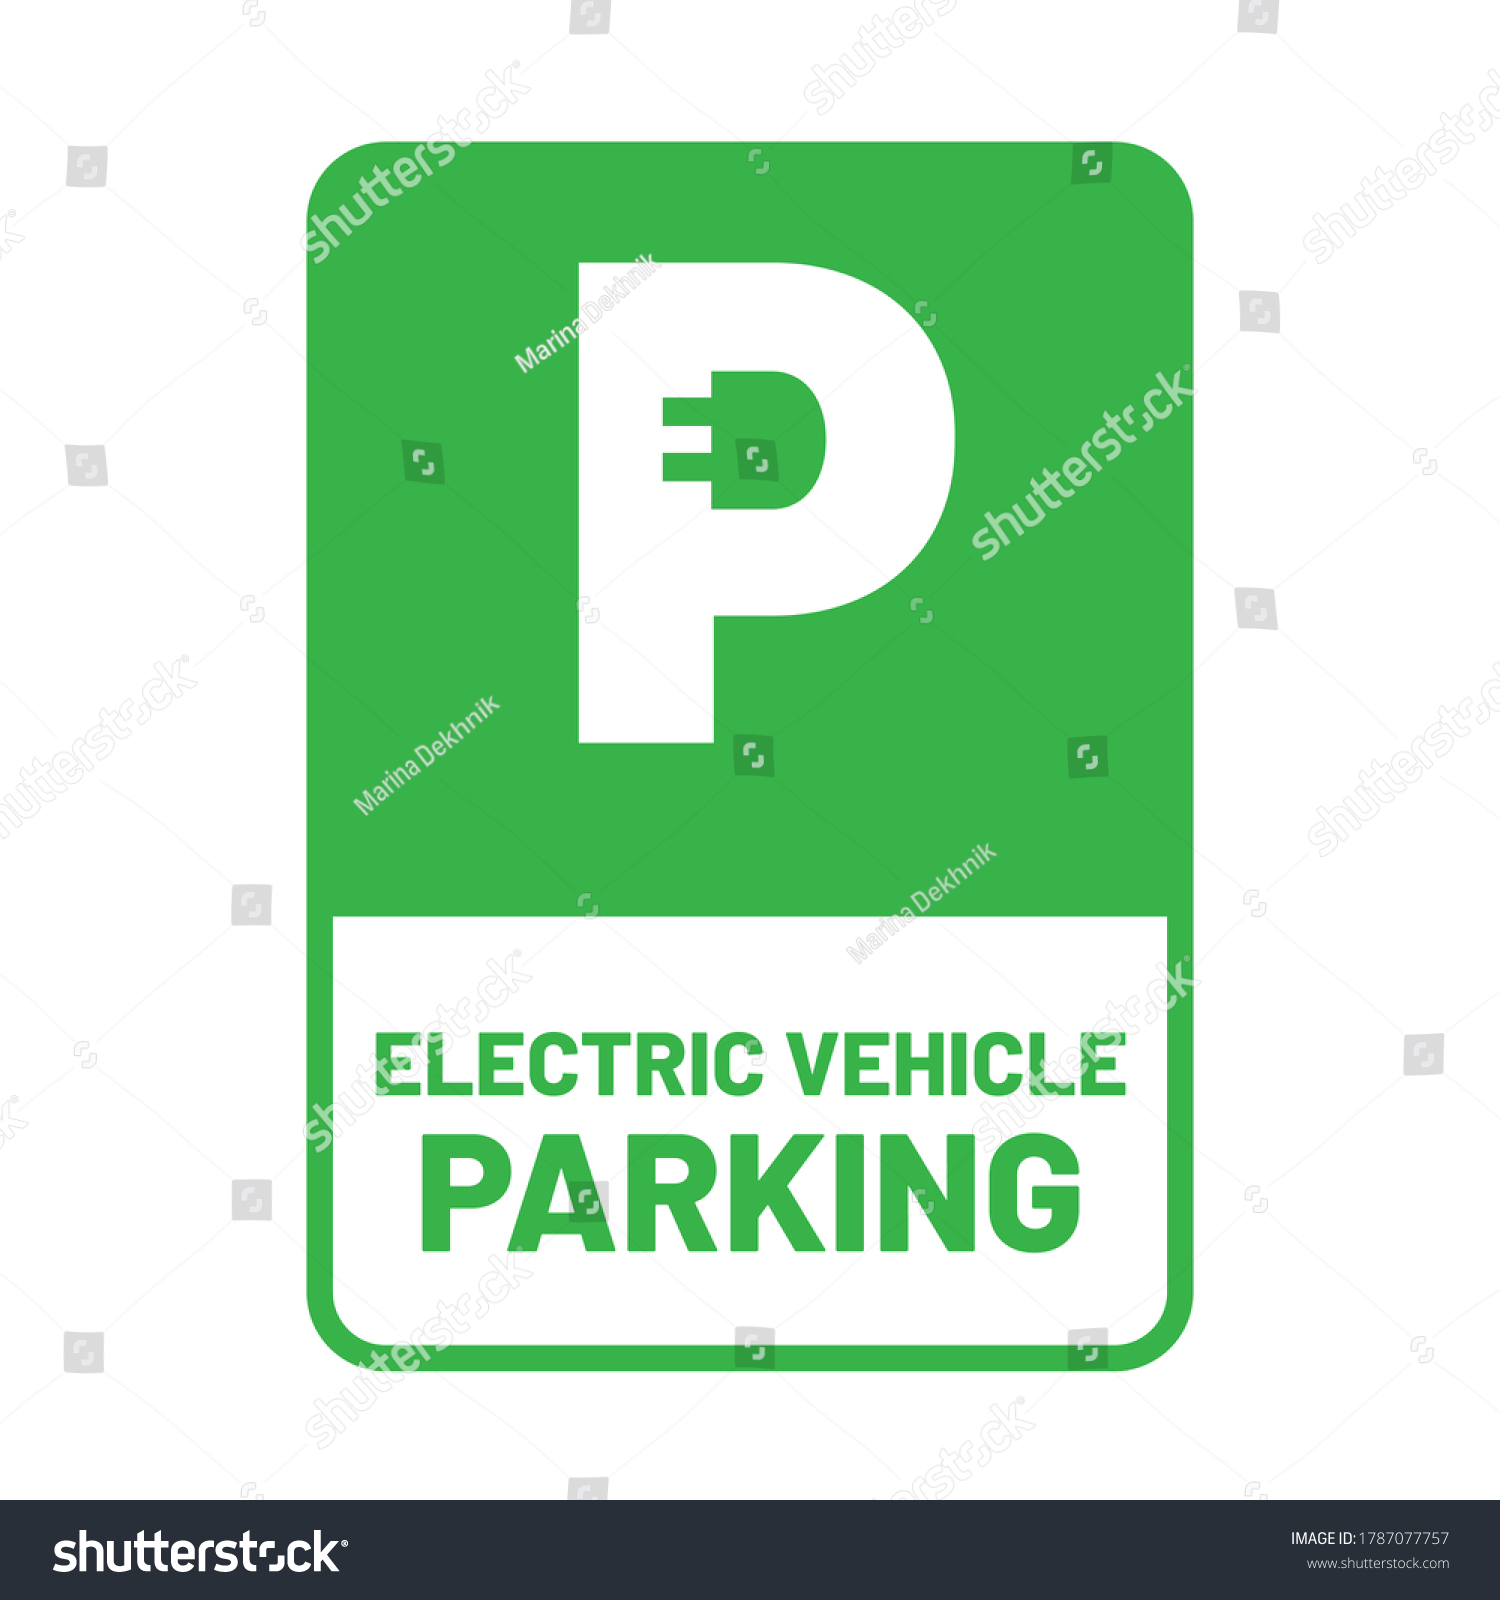 Electric Vehicle Parking Sign Green Charging стоковая векторная